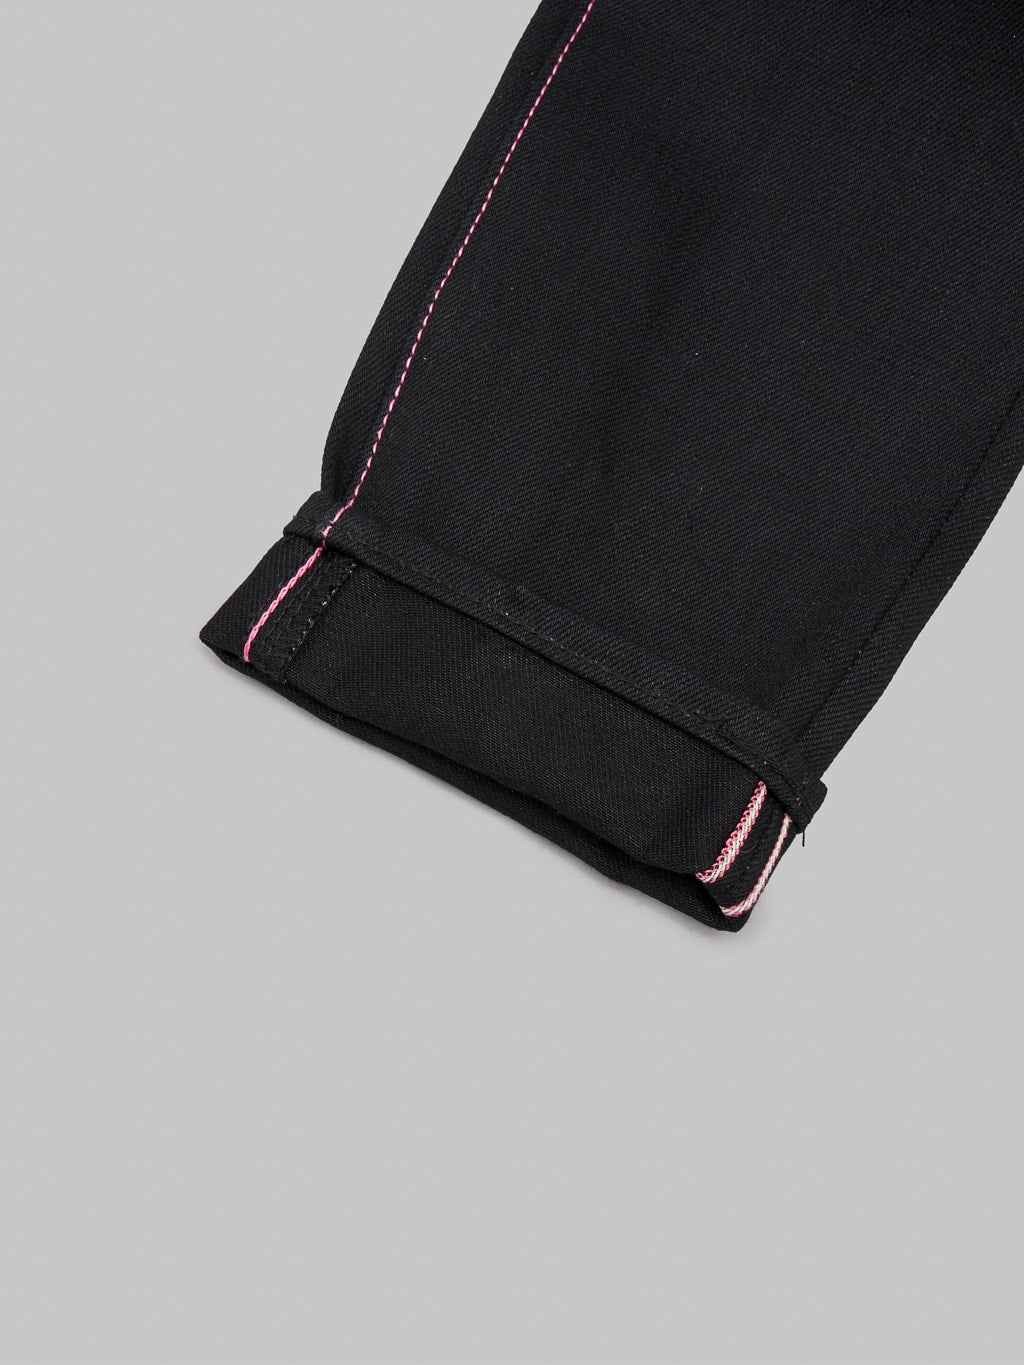 Momotaro 0605 B Black x Black Natural Tapered Jeans  selvedge closeup